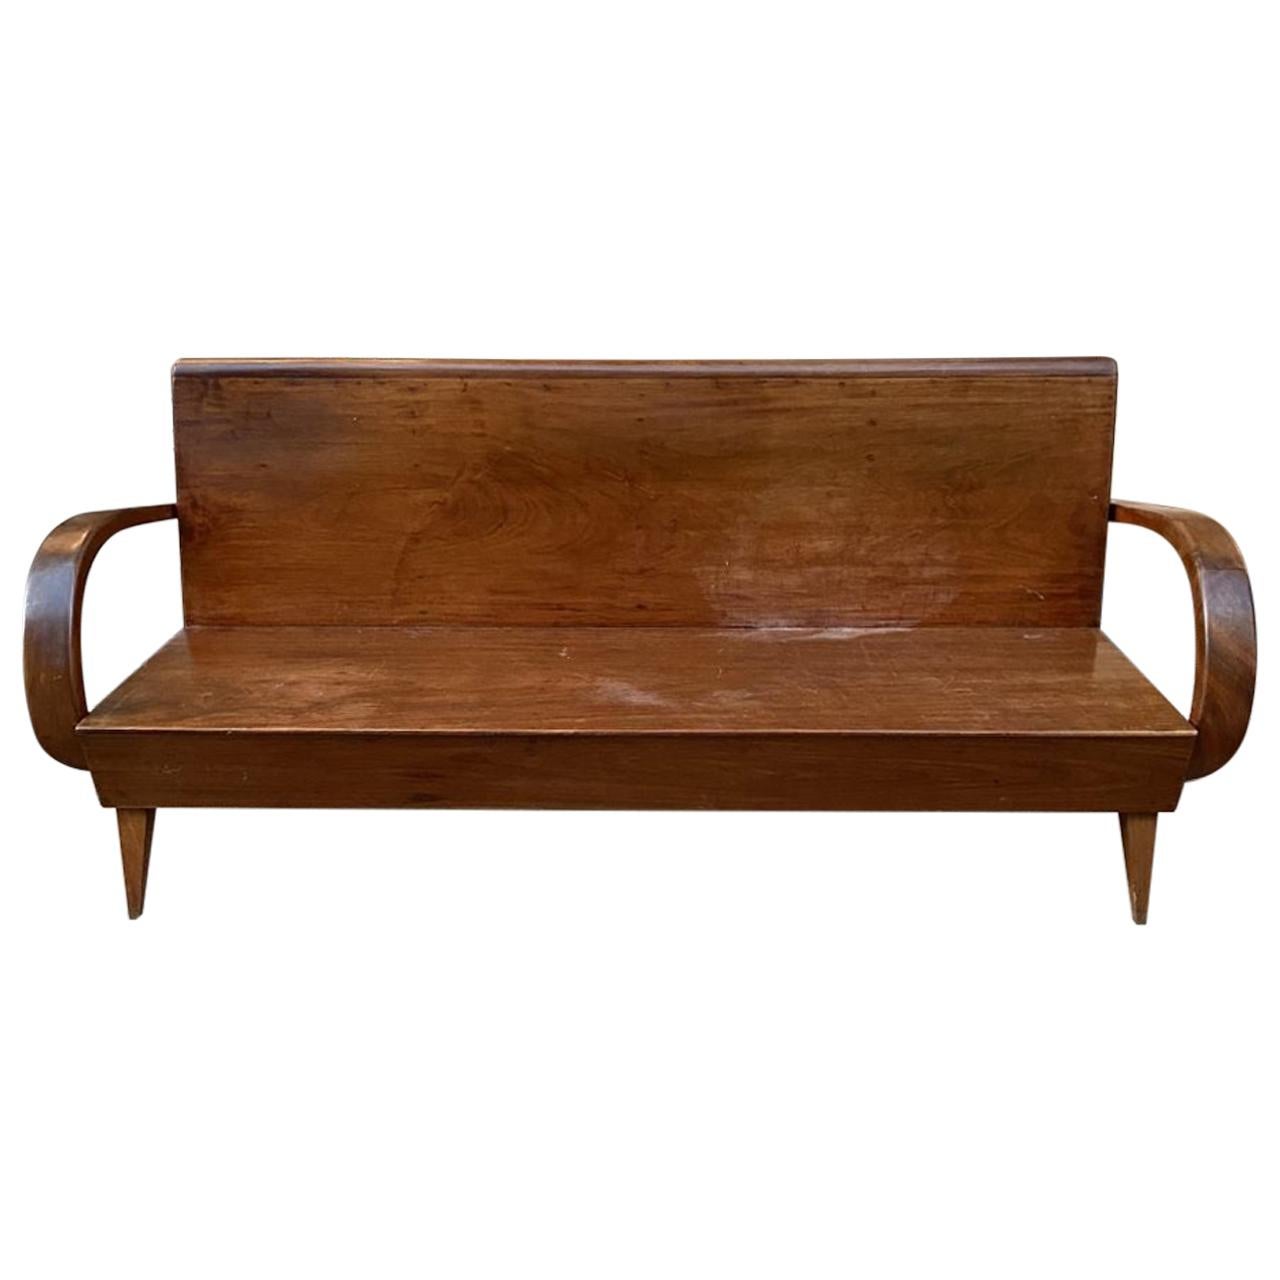 Gorgeous Art Deco French Wooden Sofa Bench